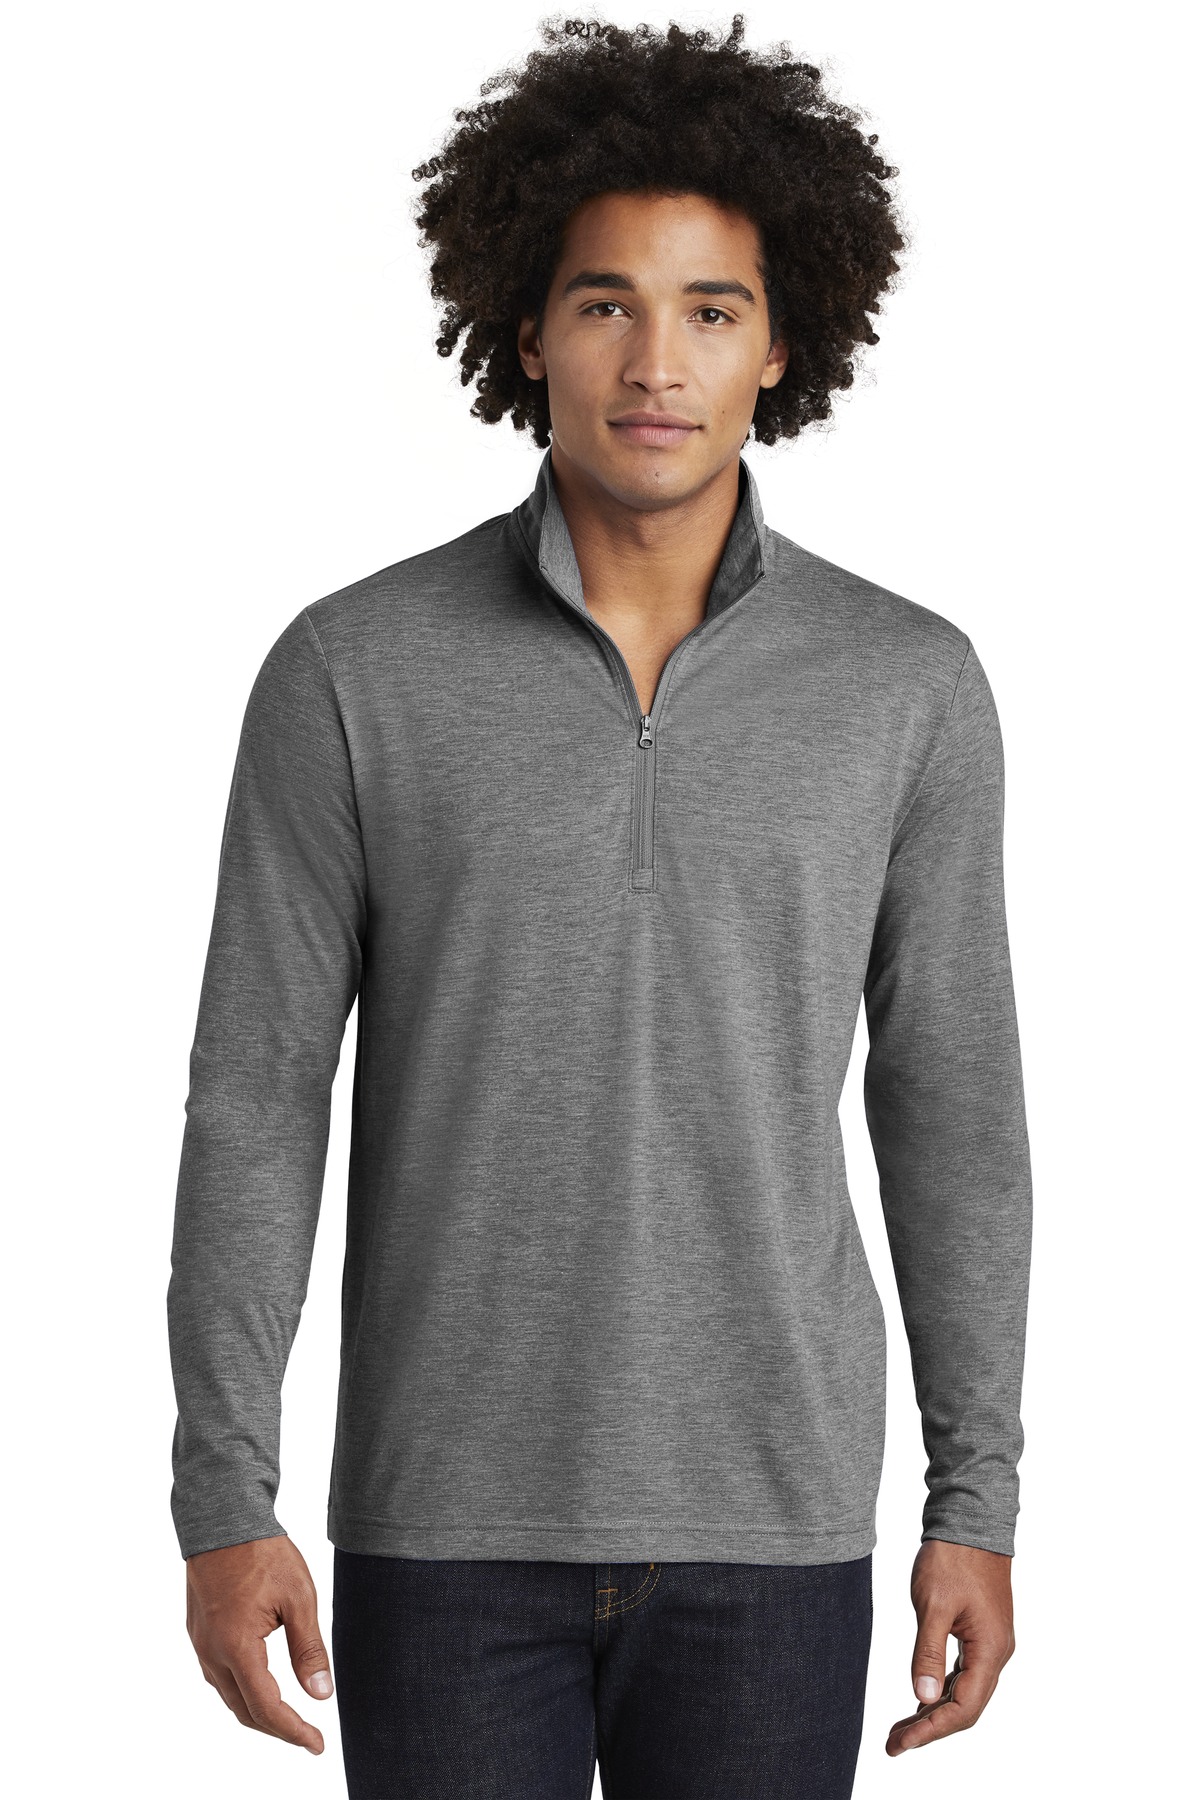 Sport-Tek Hospitality Sweatshirts & Fleece ® PosiCharge ® Tri-Blend Wicking 1/4-Zip Pullover.-Sport-Tek